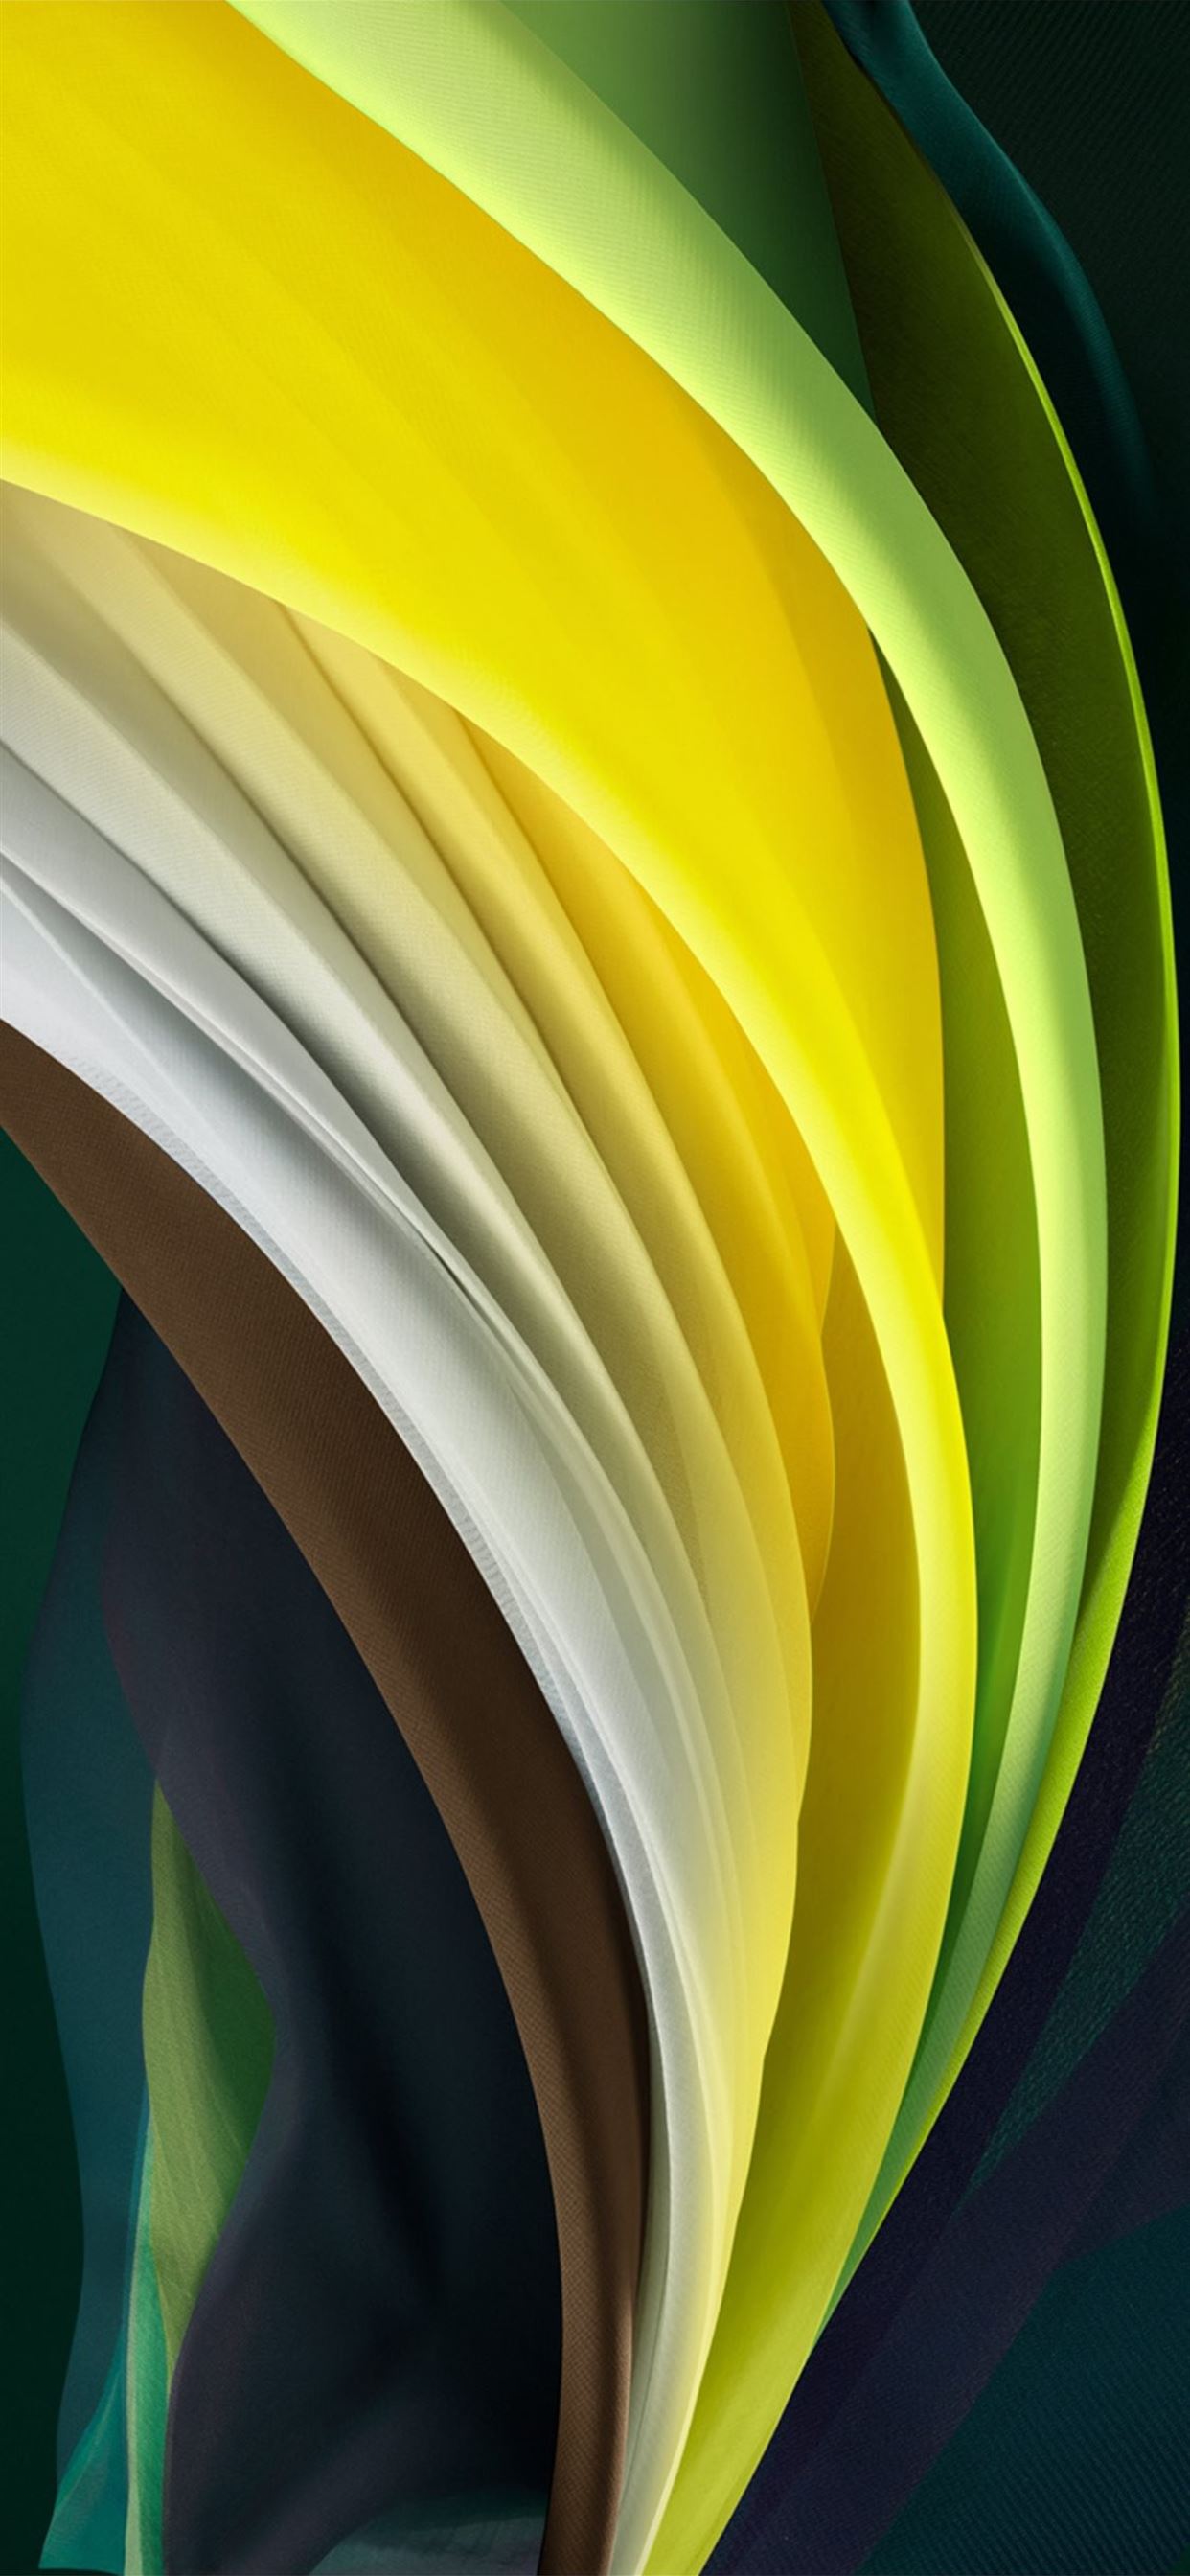 iphone se 2020 stock wallpaper Silk Green Light iPhone X Wallpapers Free  Download